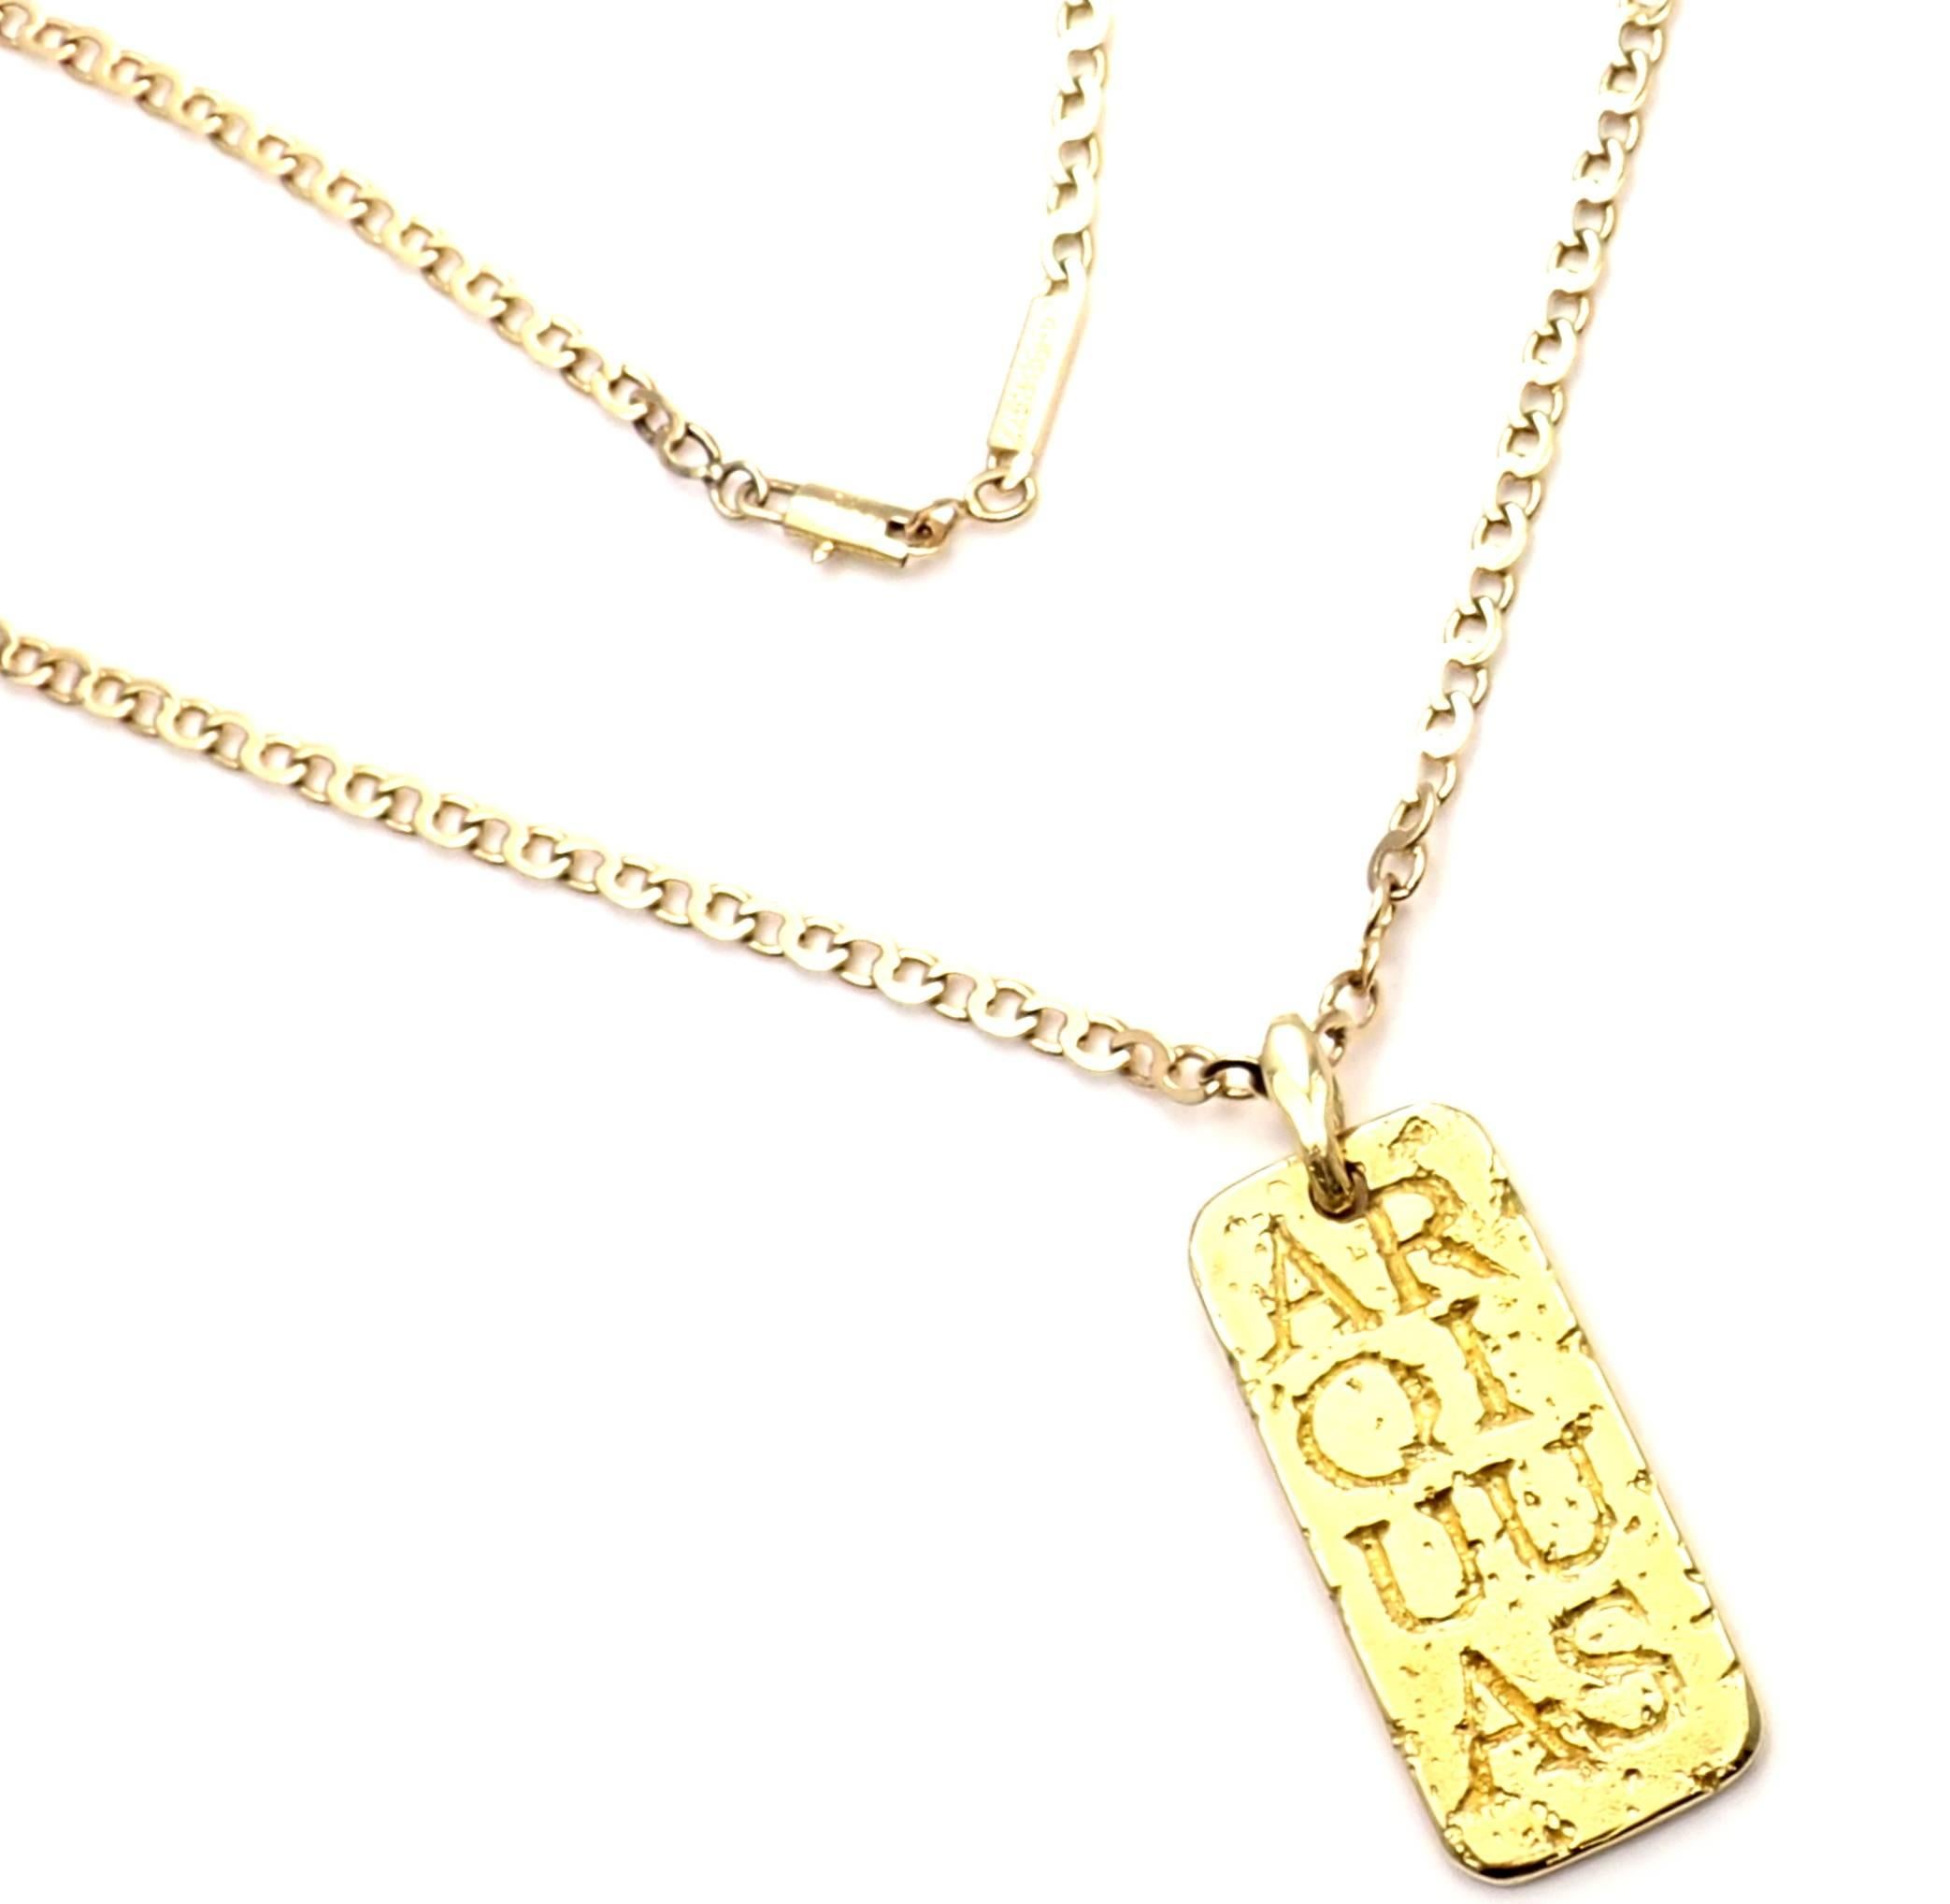 18k Yellow Gold Vintage Aquarius Pendant Necklace by Van Cleef & Arpels. 
Details: 
Necklace Length: 23.5